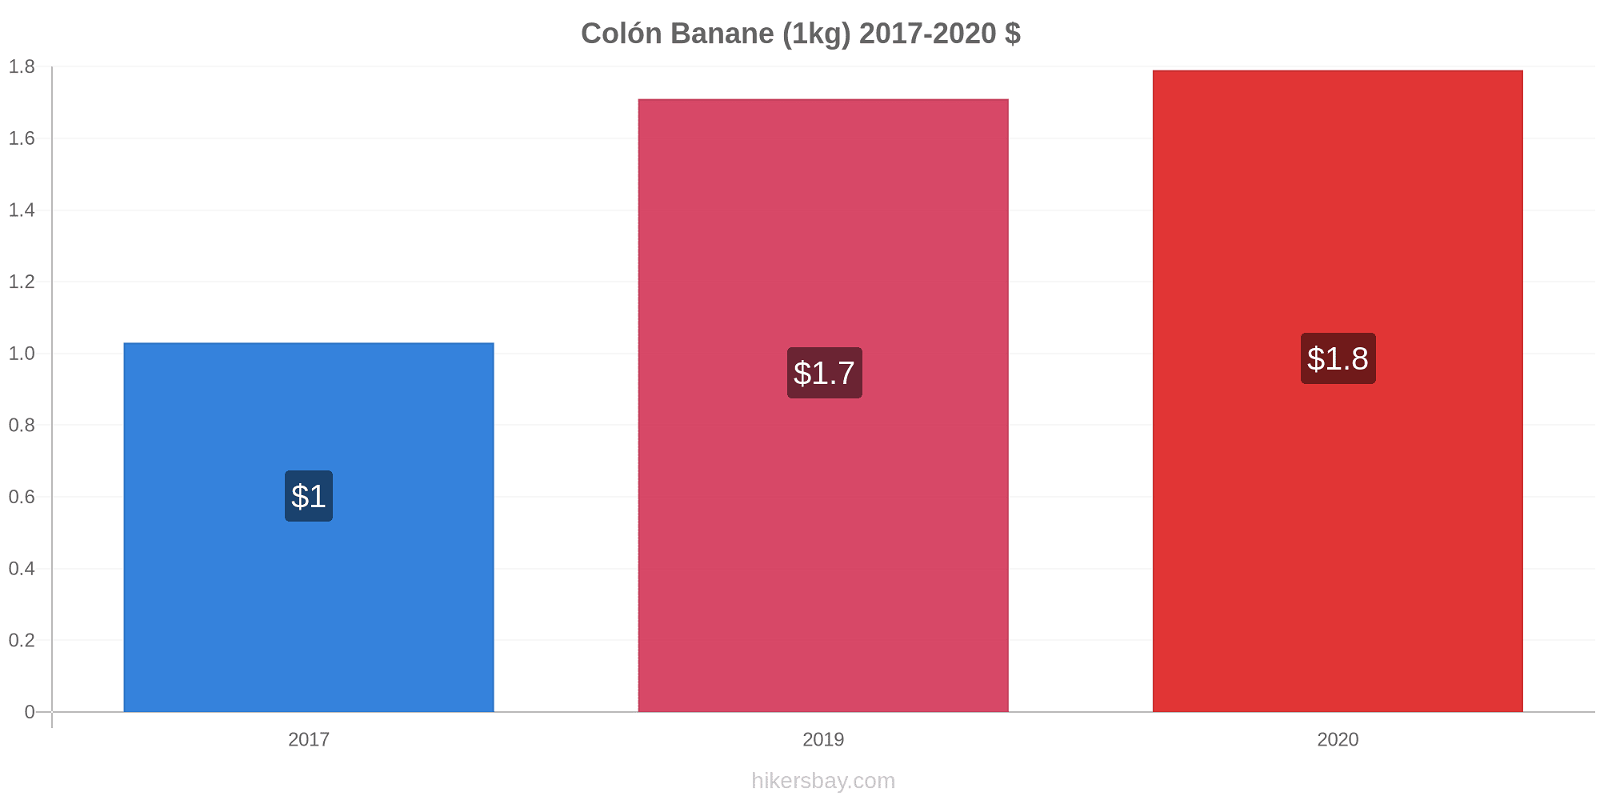 Colón variazioni di prezzo Banana (1kg) hikersbay.com